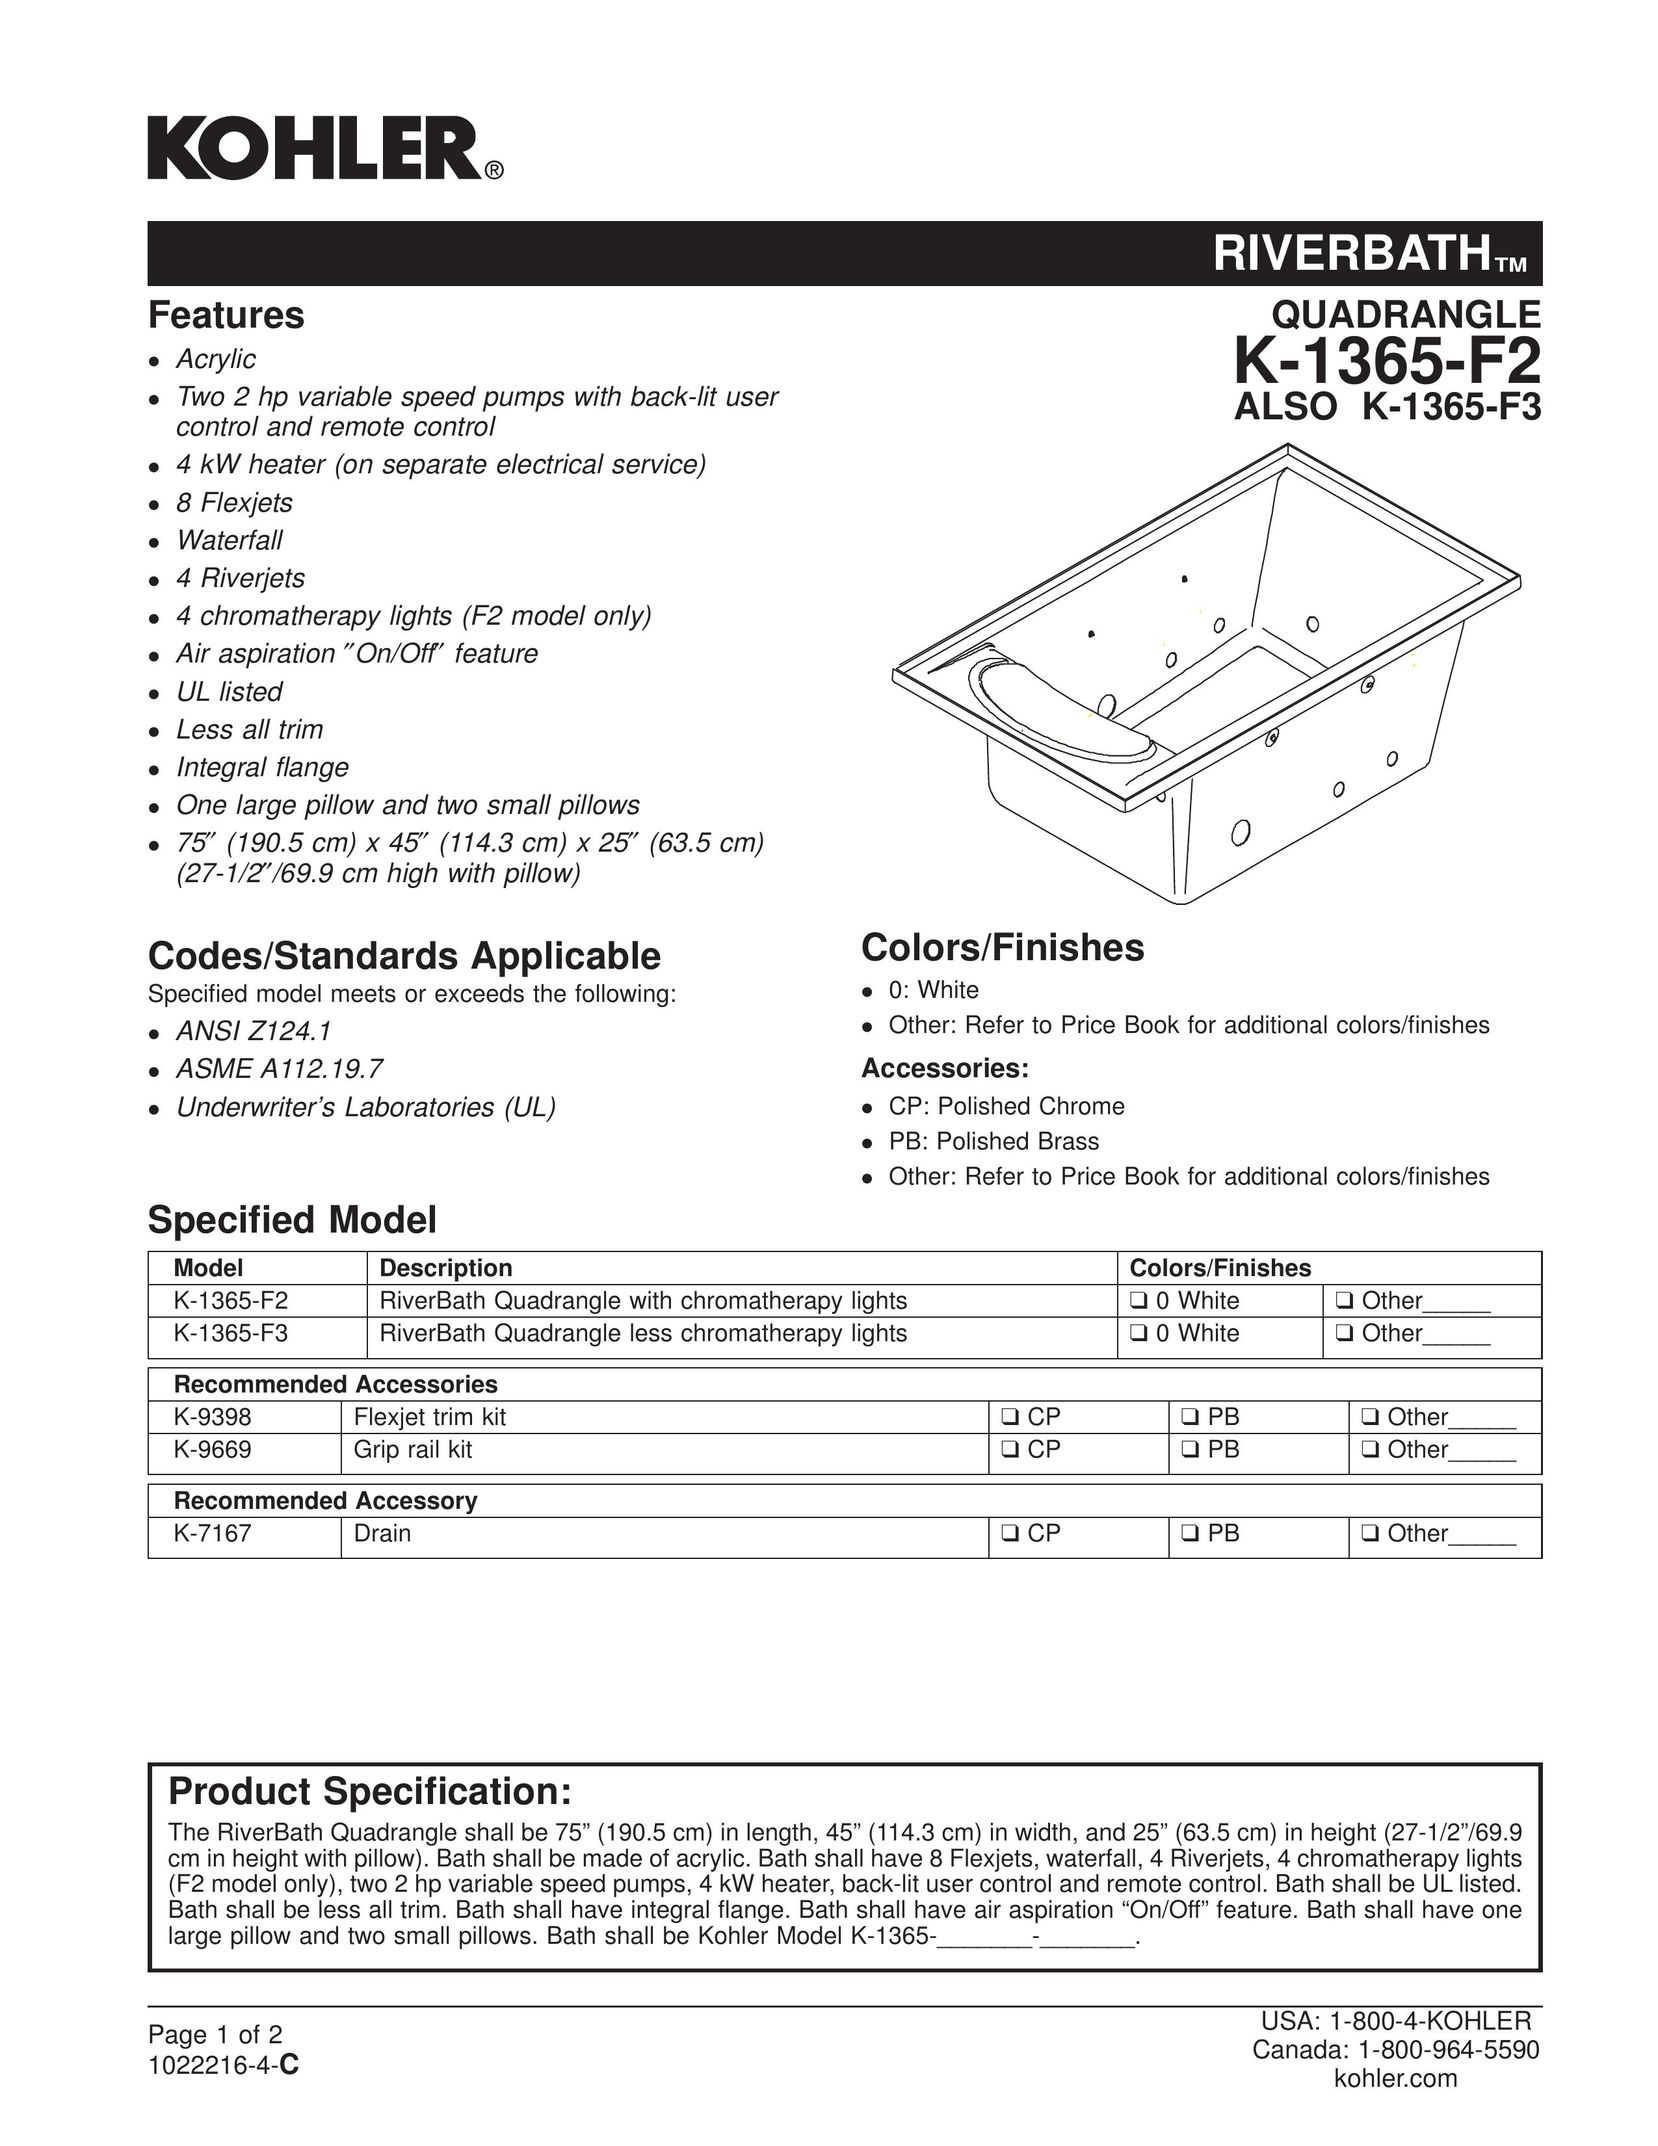 Kohler K-1365-F3 Plumbing Product User Manual